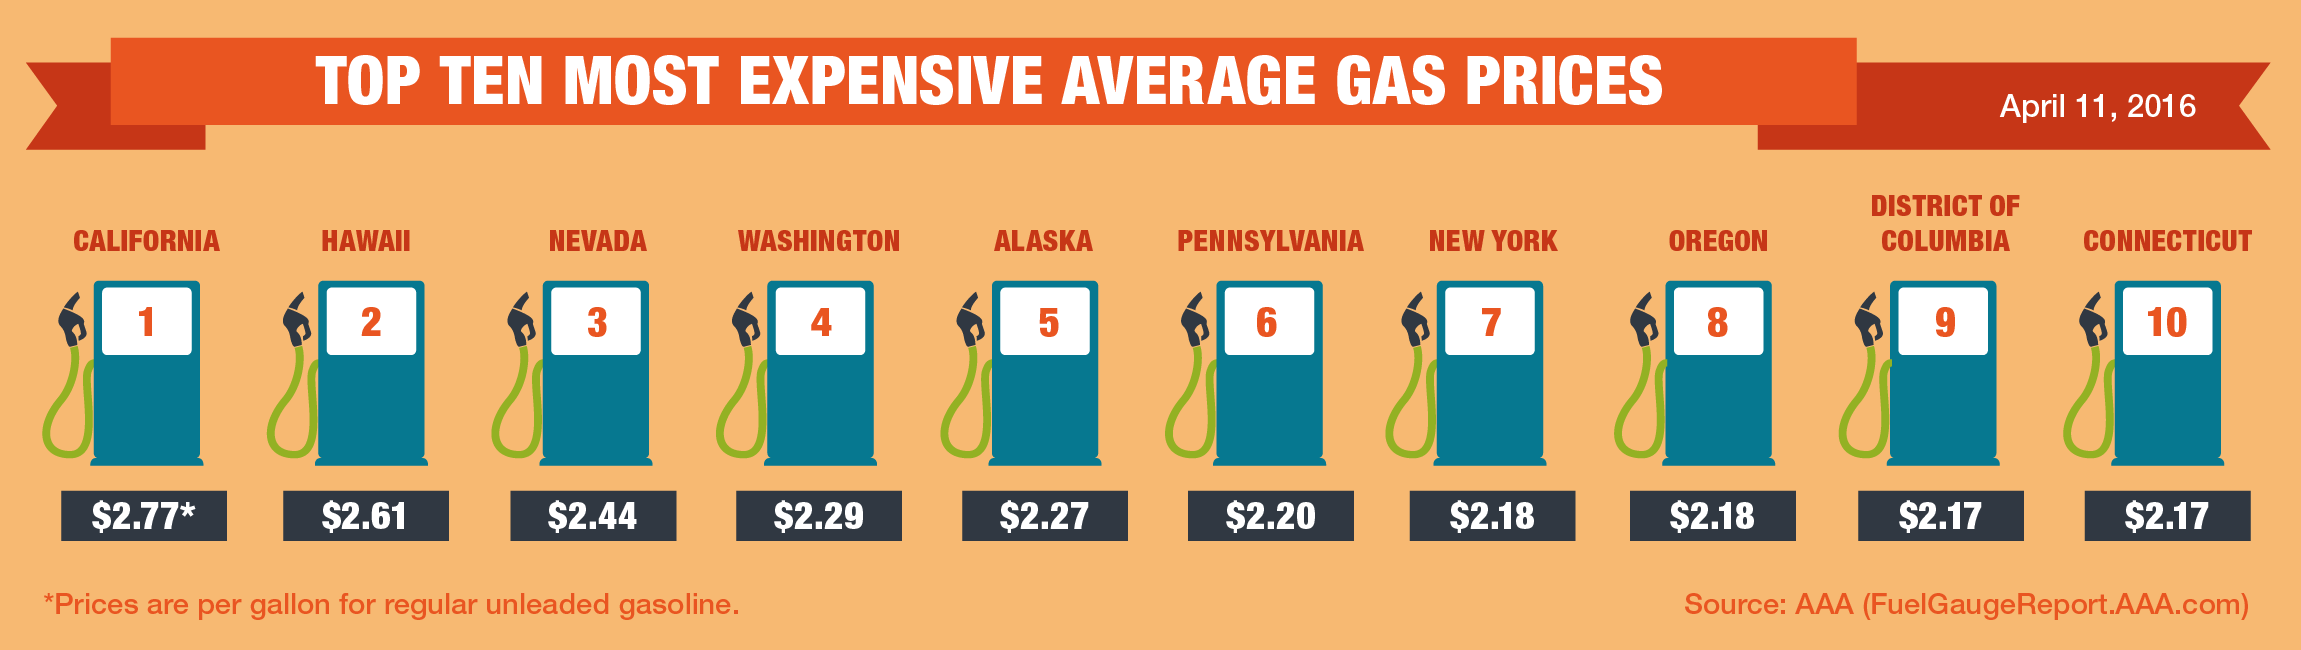 Top10-Highest-Average-Gas-Prices-4-11-16